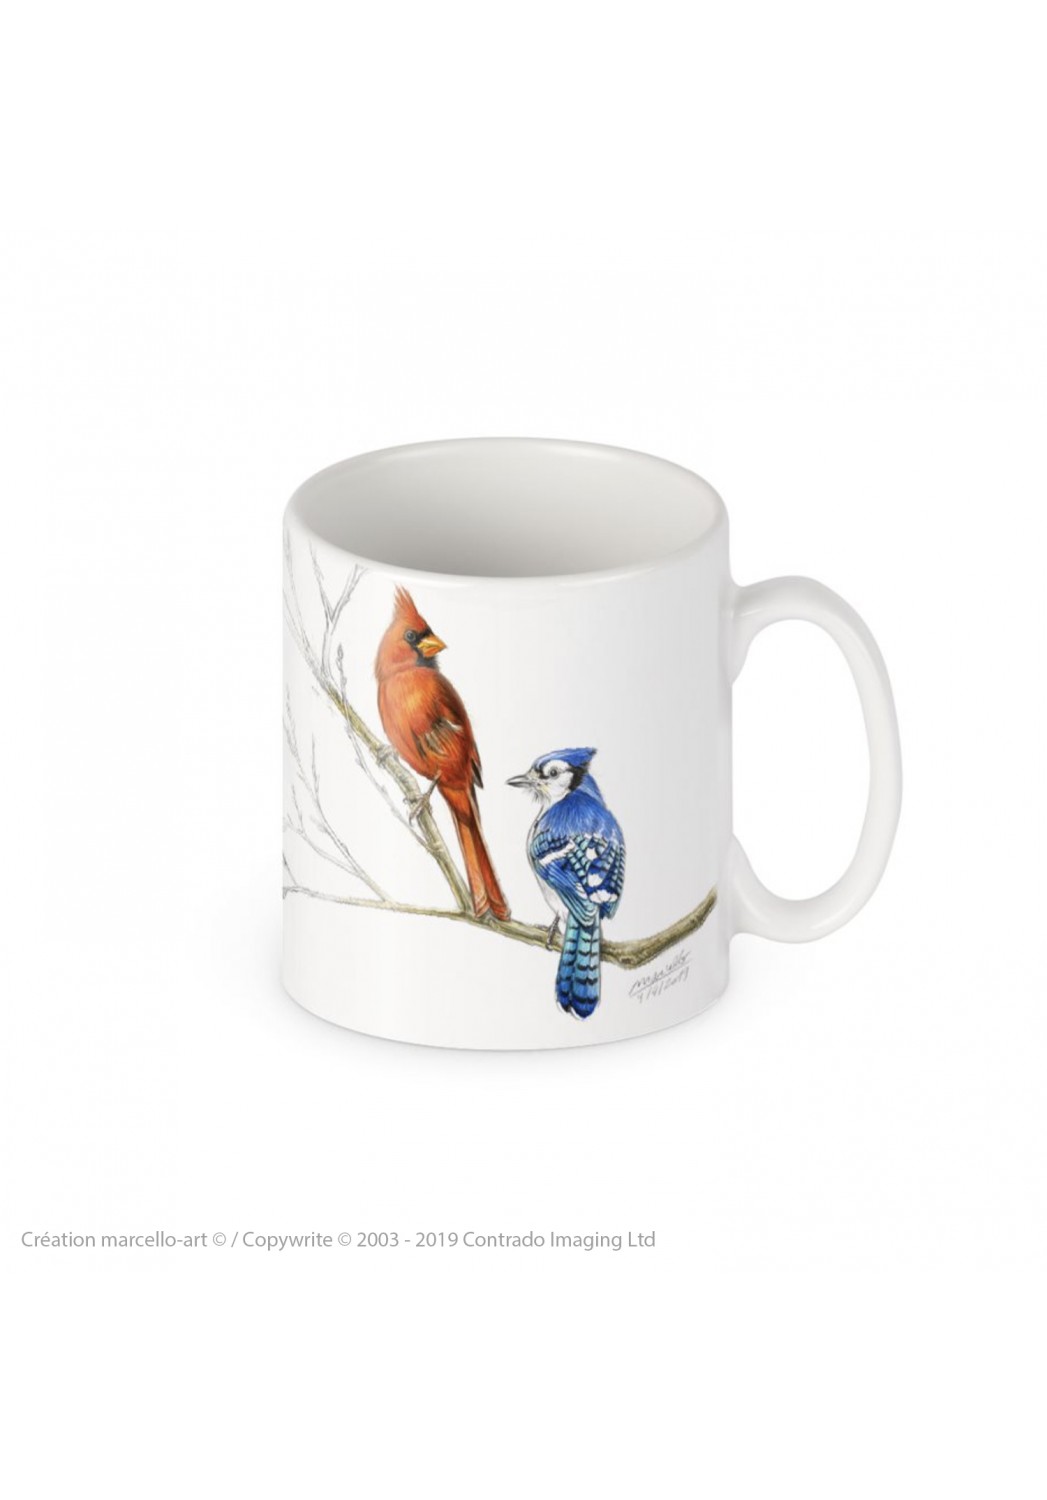 Marcello-art: Decoration accessoiries Porcelain mug 393 blue jay & cardinal